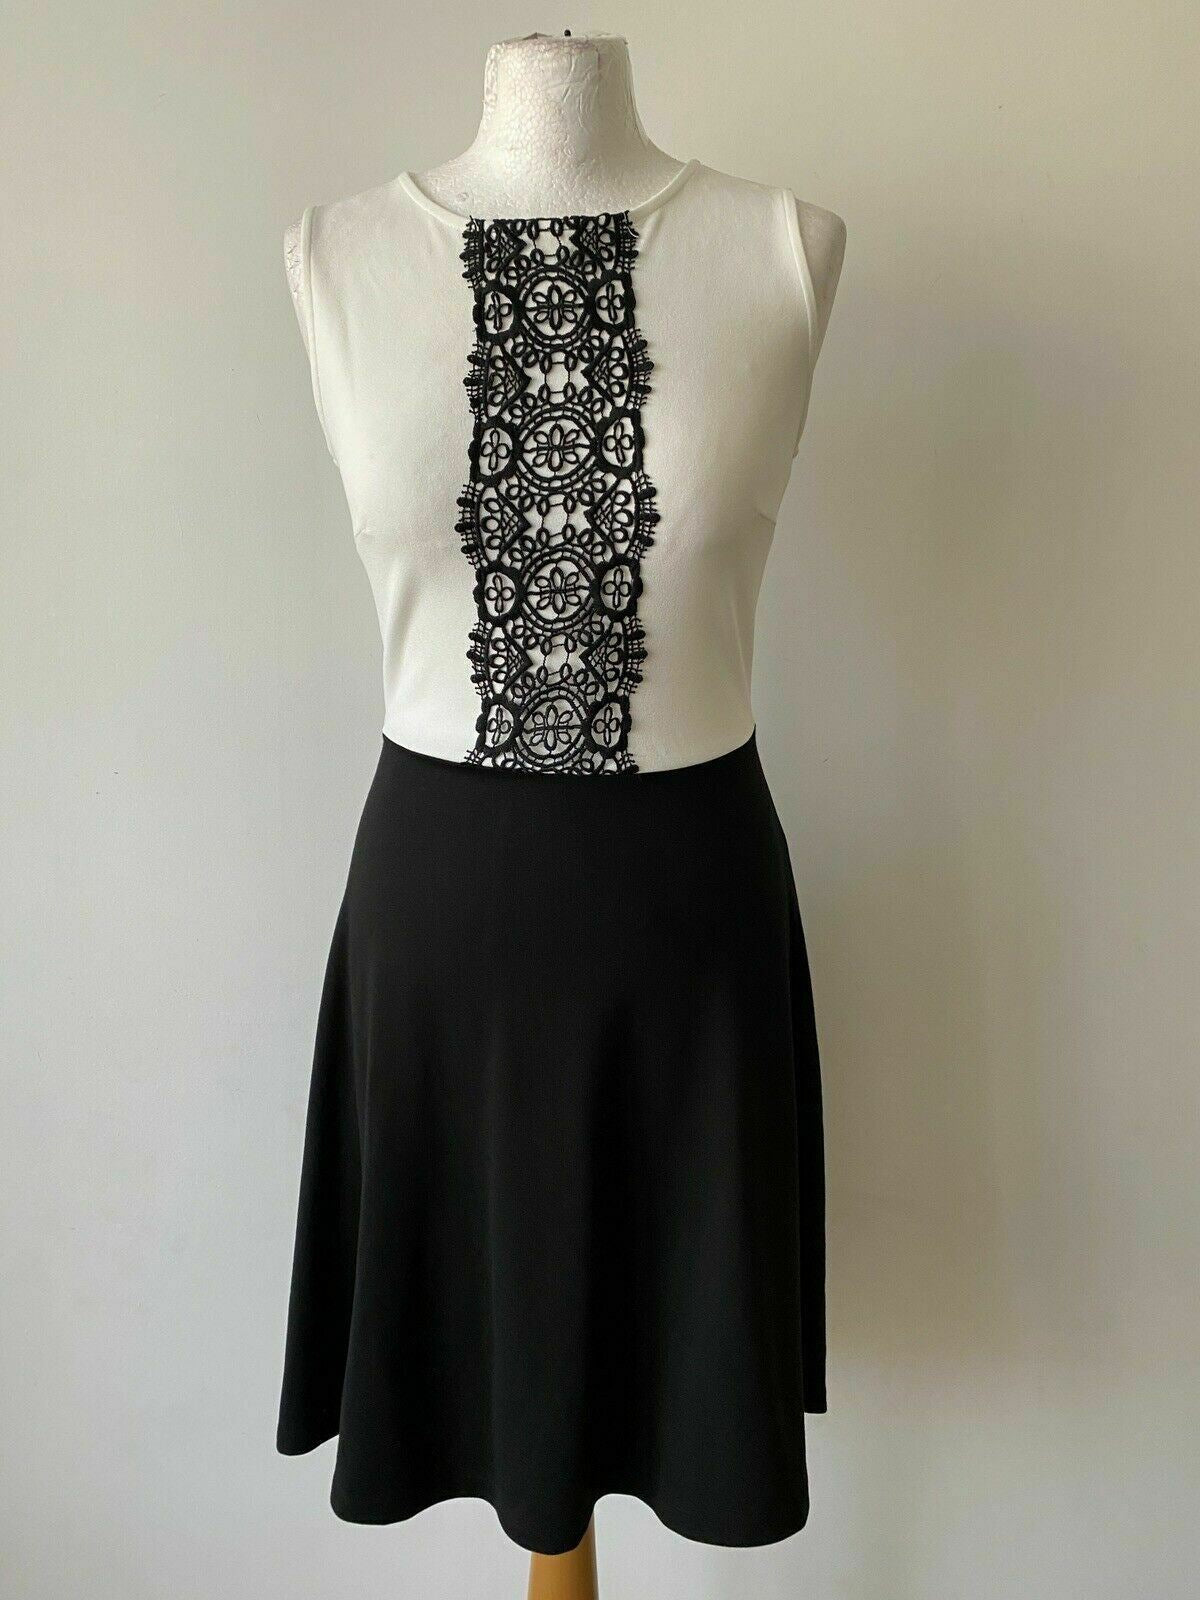 Anna Field Black / White Dress Lace Detail Sleeveless Dress Size 6 UK / 34 EU